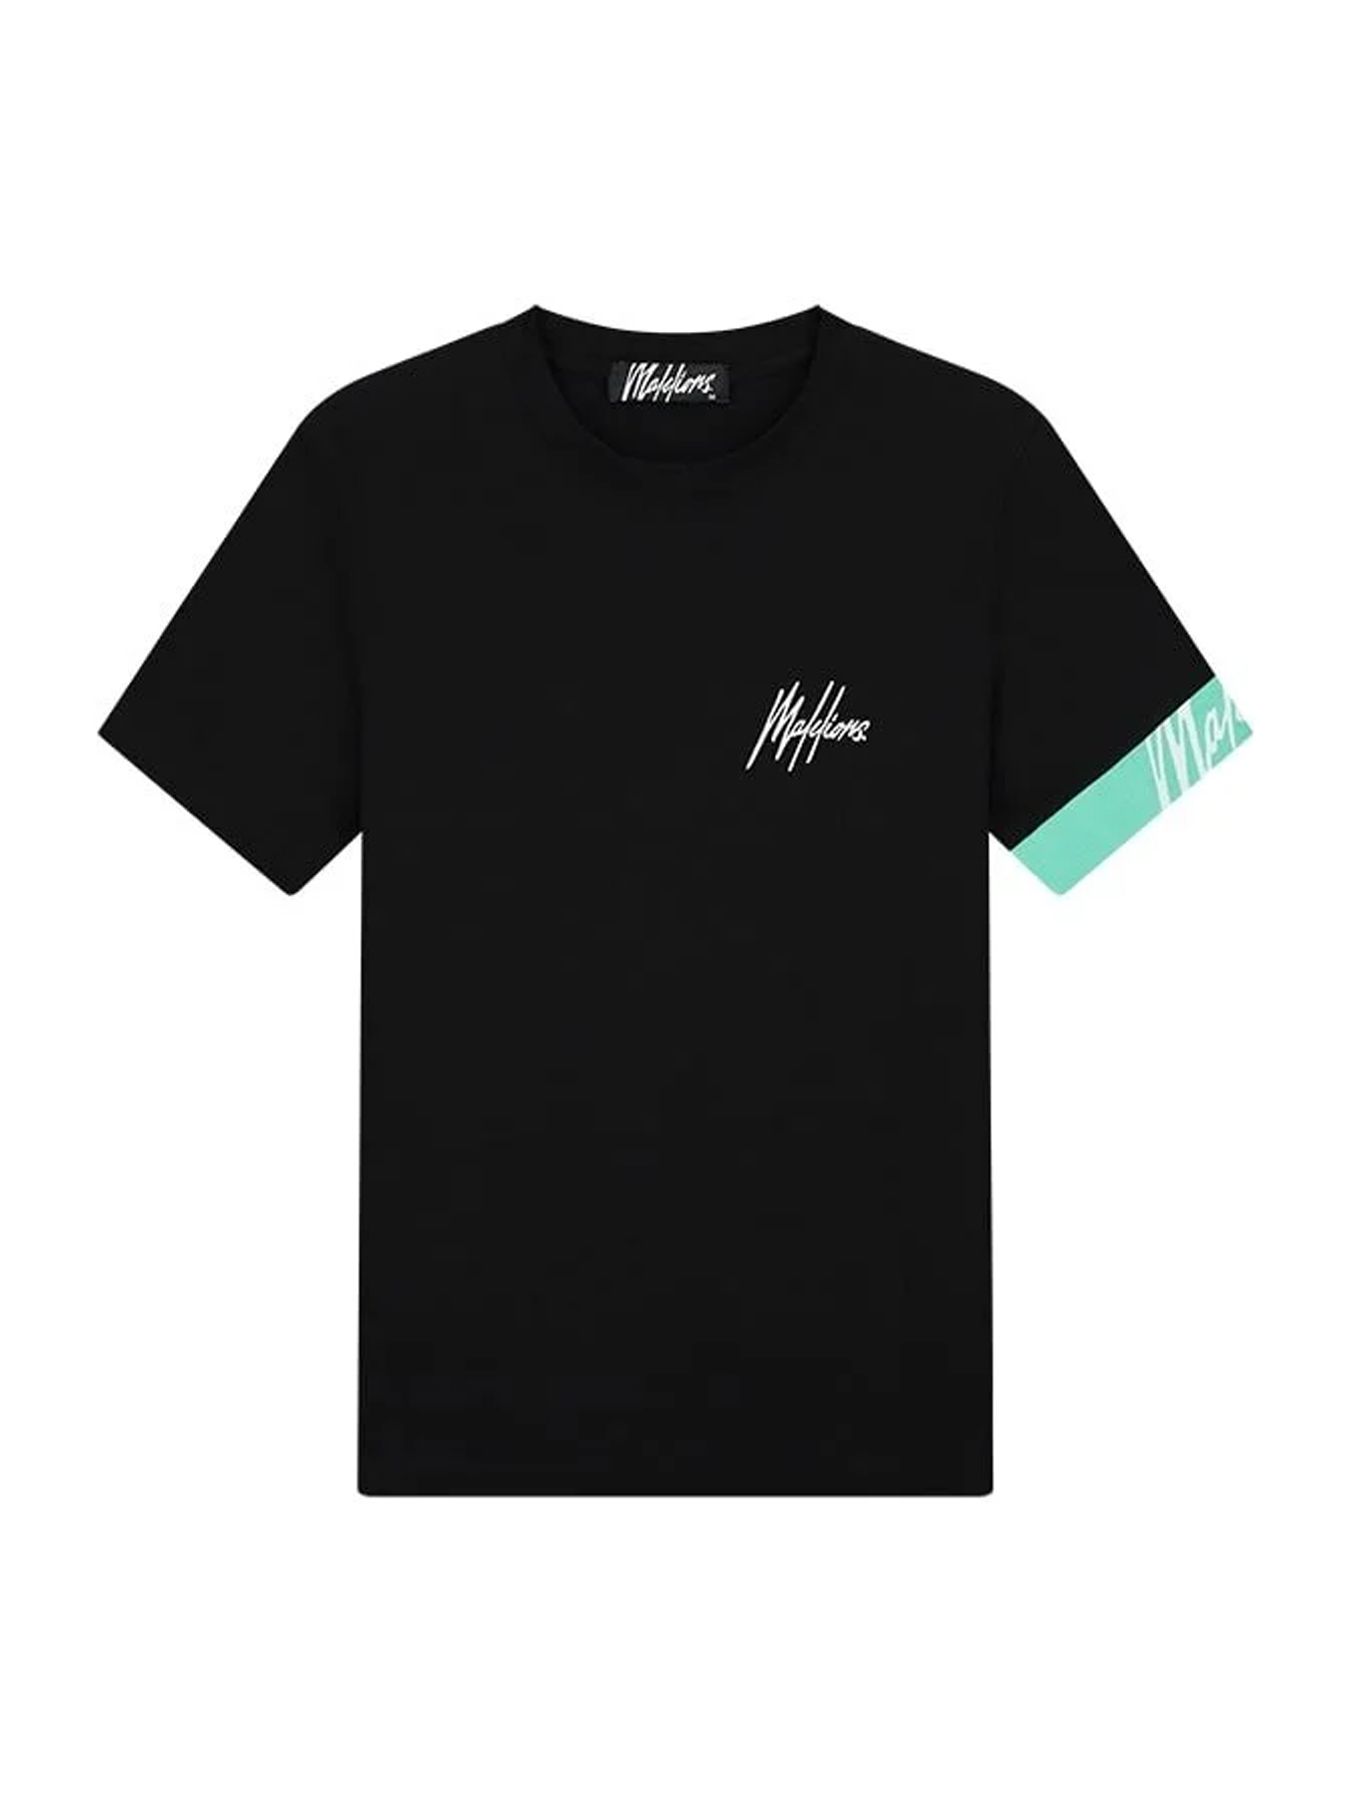 Malelions Men Captain t-shirt 2.0 Black/Turquoise 00108667-924